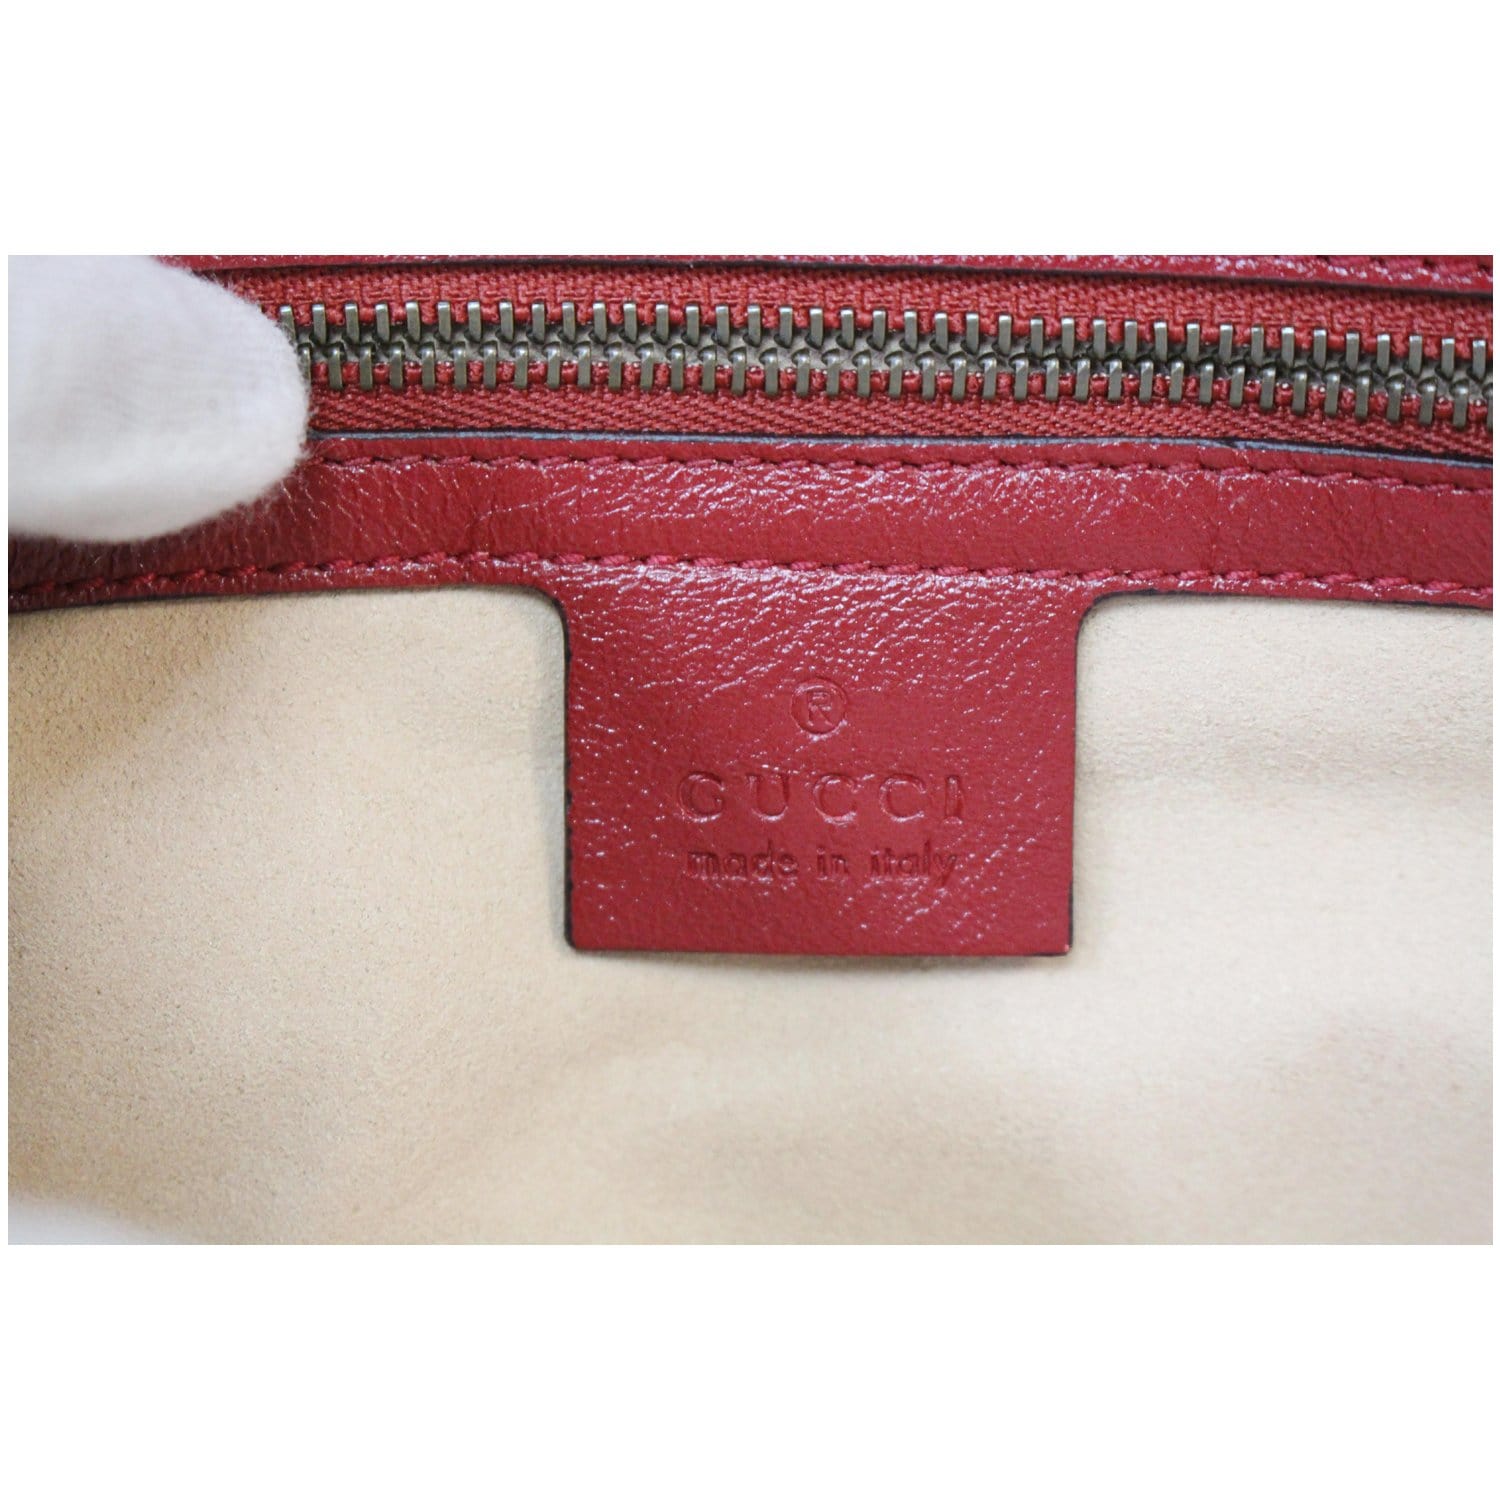 Destashing Hoarder - Gucci outlet SALE! Mini Alma bag. Order by